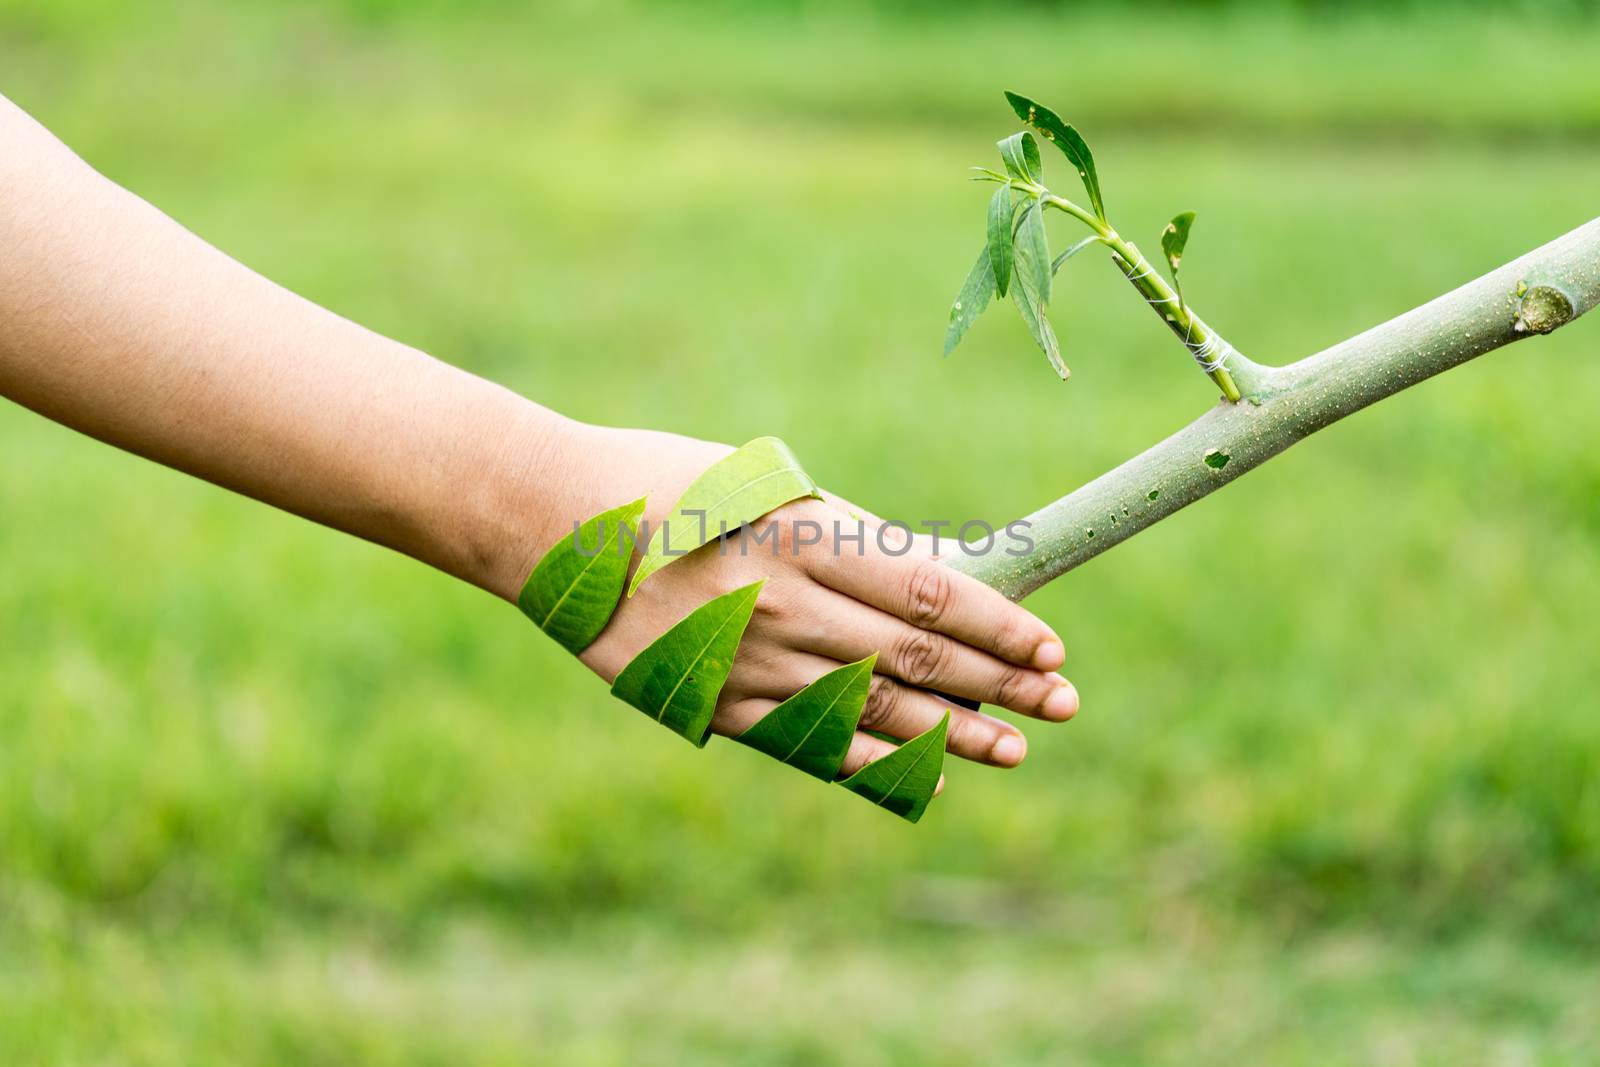 Handshake With Nature by sohel.parvez@hotmail.com